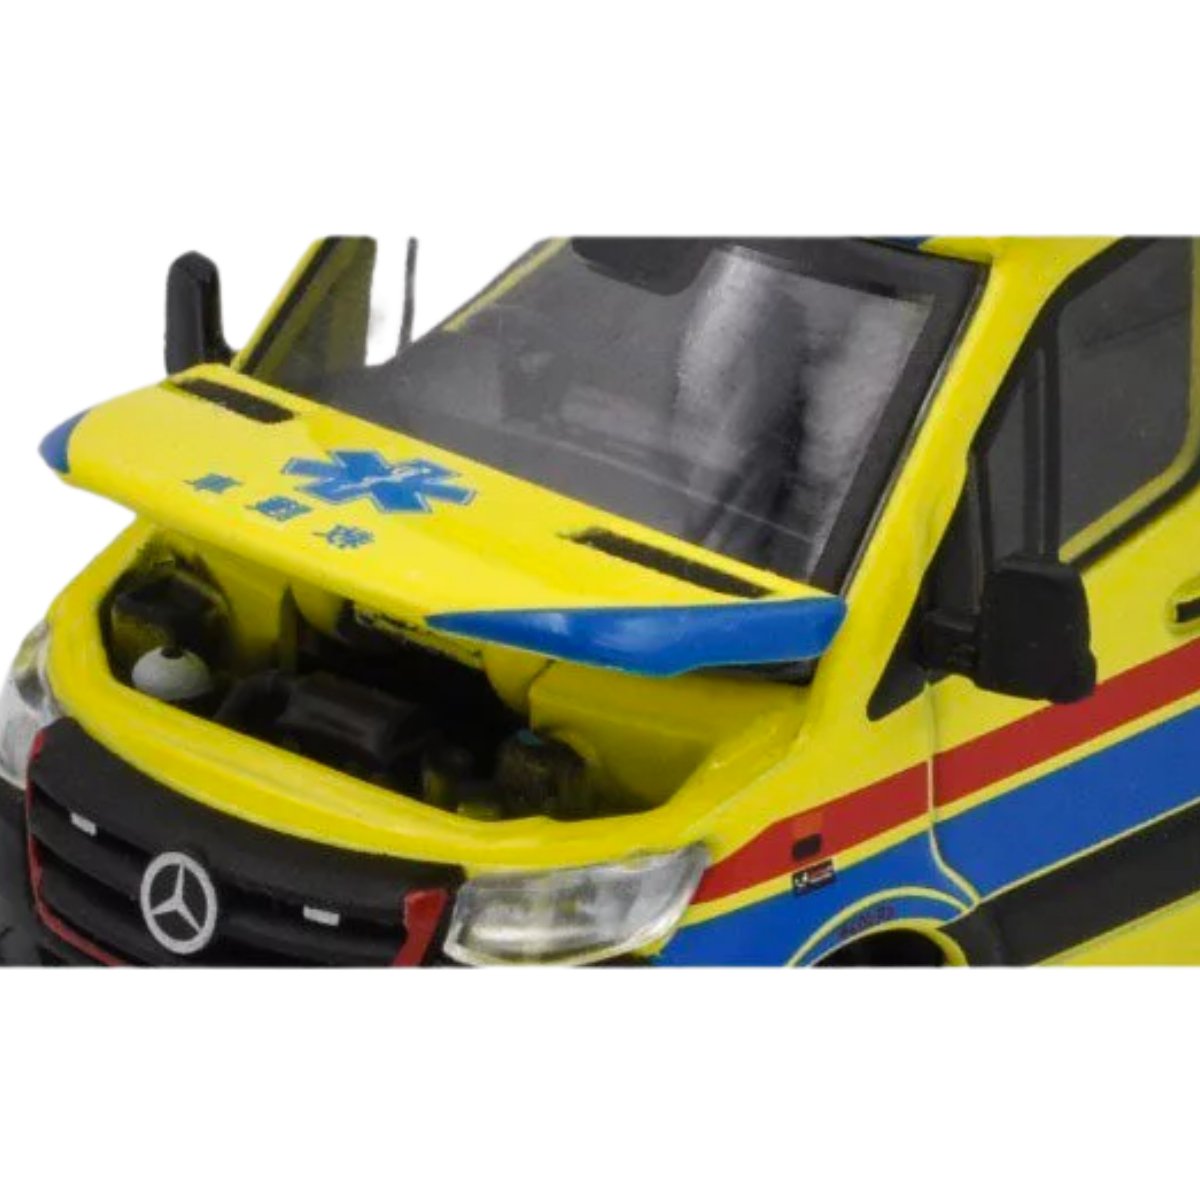 Era Car Mercedes-Benz Sprinter HK Ambulance A504 (1:64 Scale)